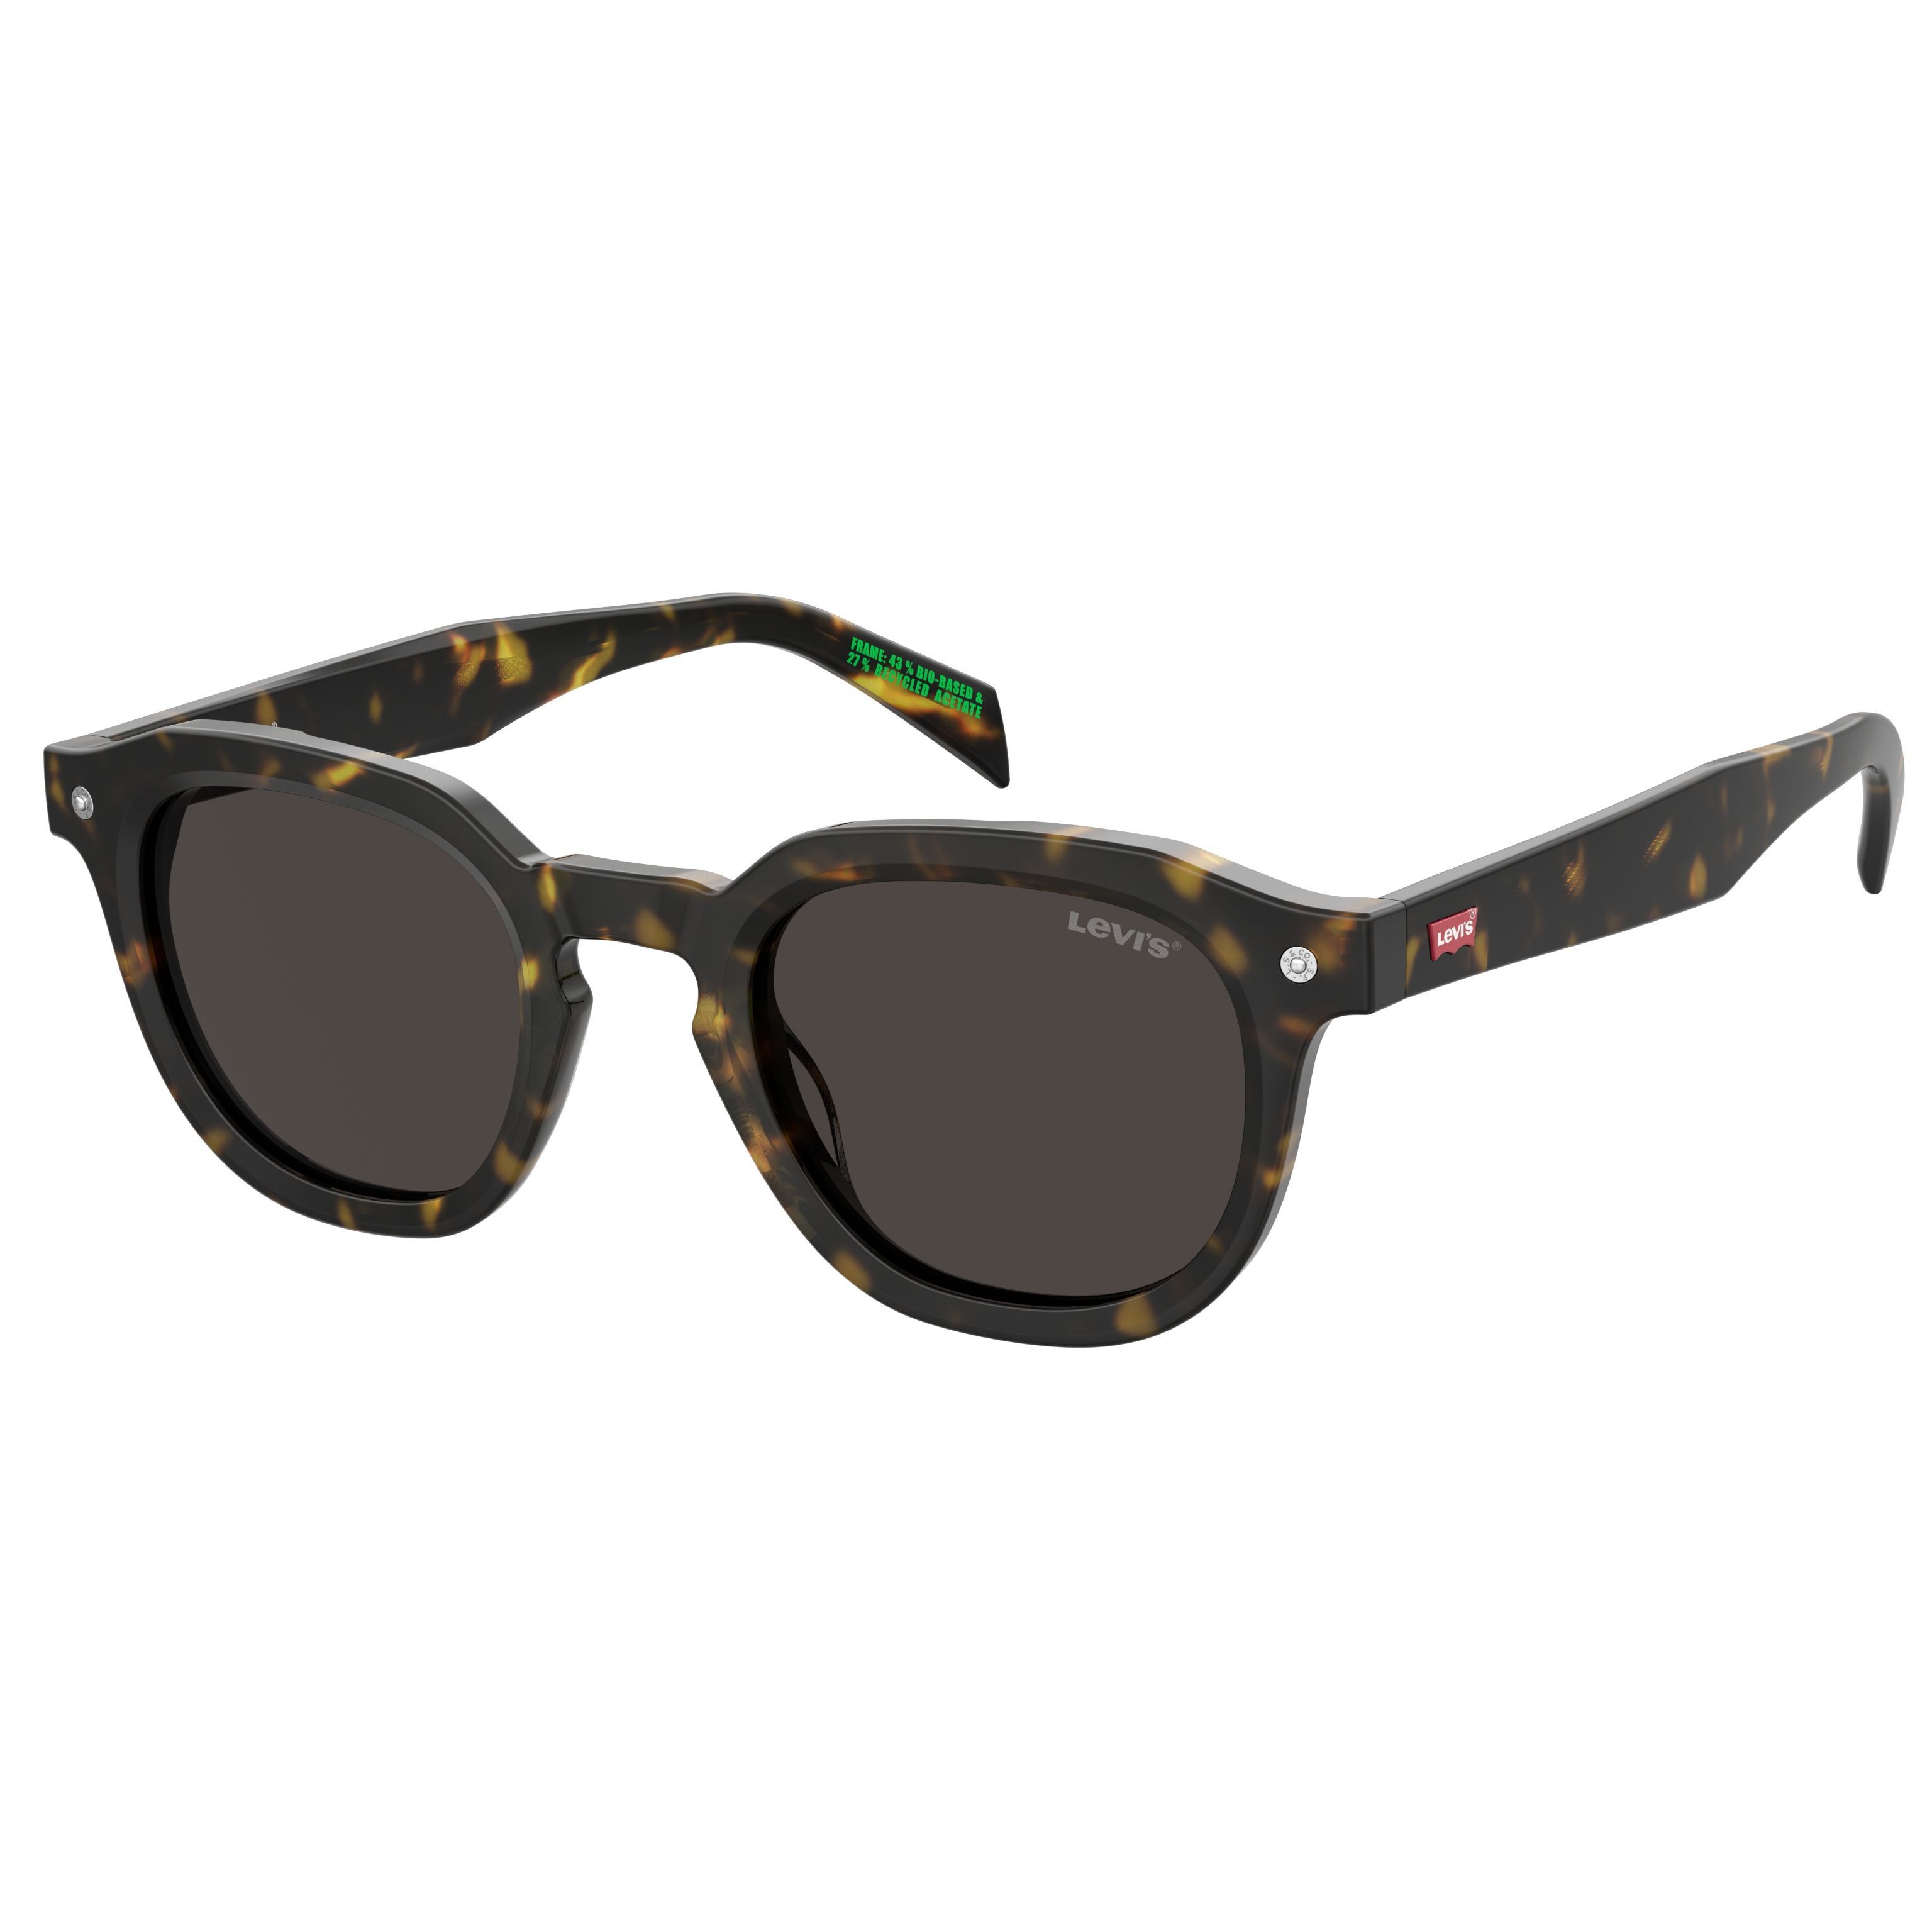 LV 5052 S Round Sunglasses 086 IR - size 48